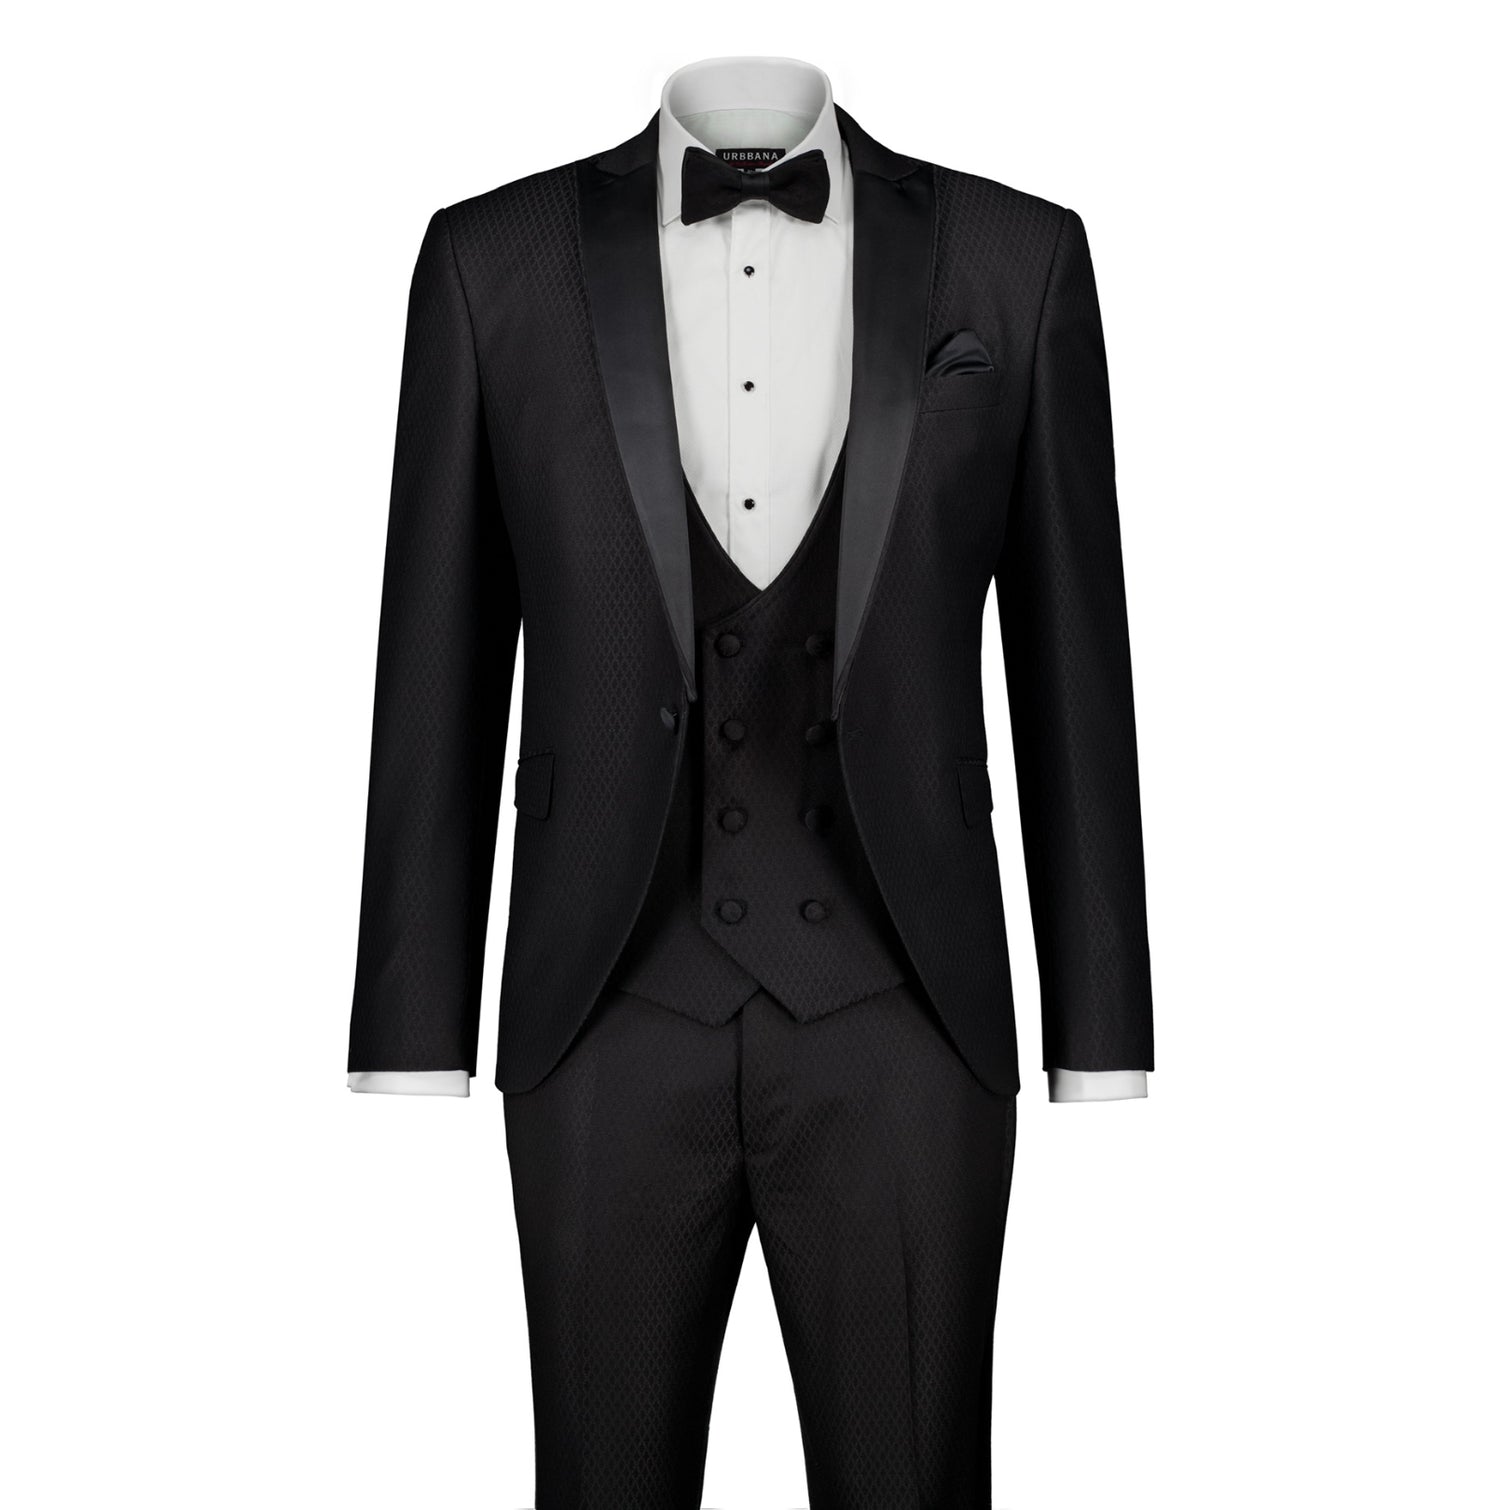 The Elmas Ceremony Suit - Black - Suit by Urbbana